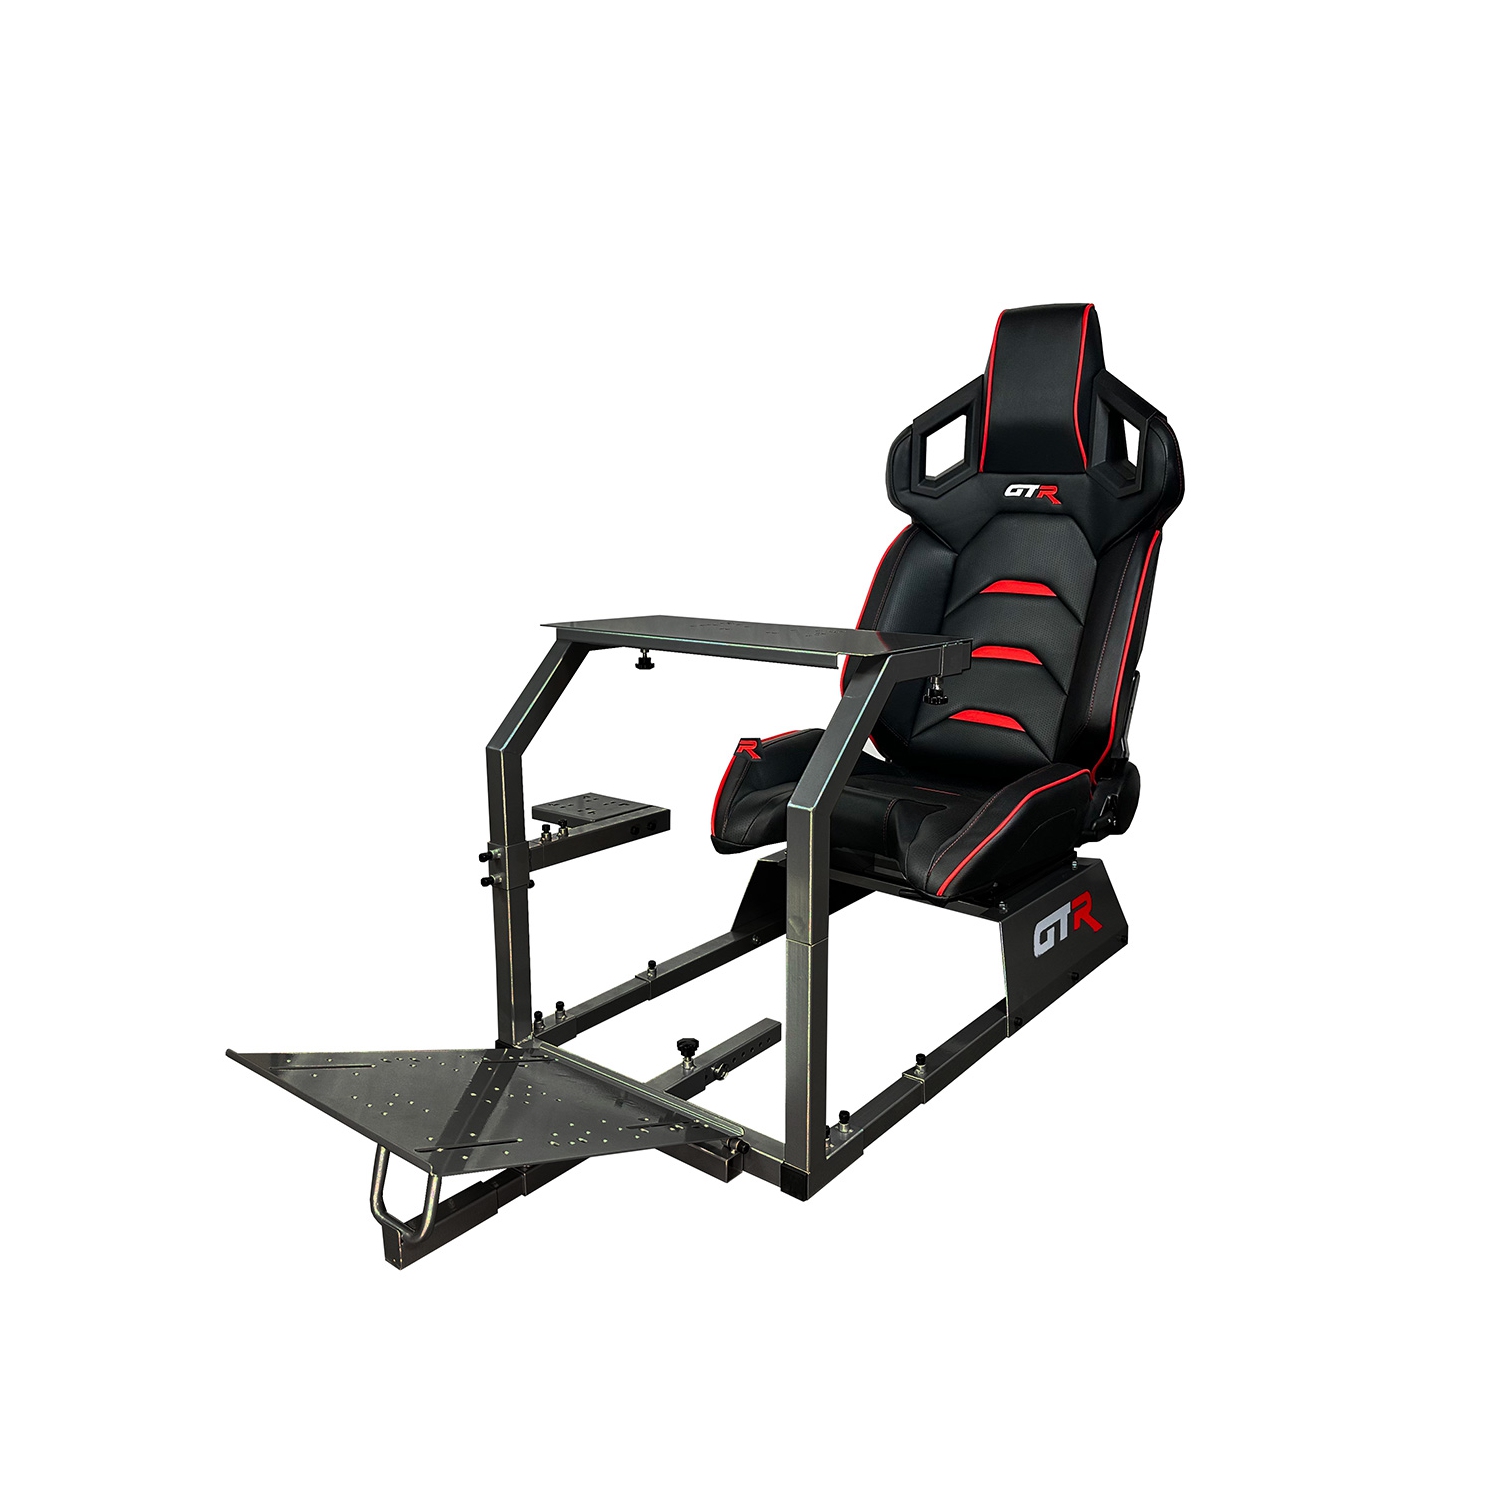 GTR Simulator GTA Model (Black) Racing Simulator Cockpit with Black/Red Adjustable Leatherette Pista Seat